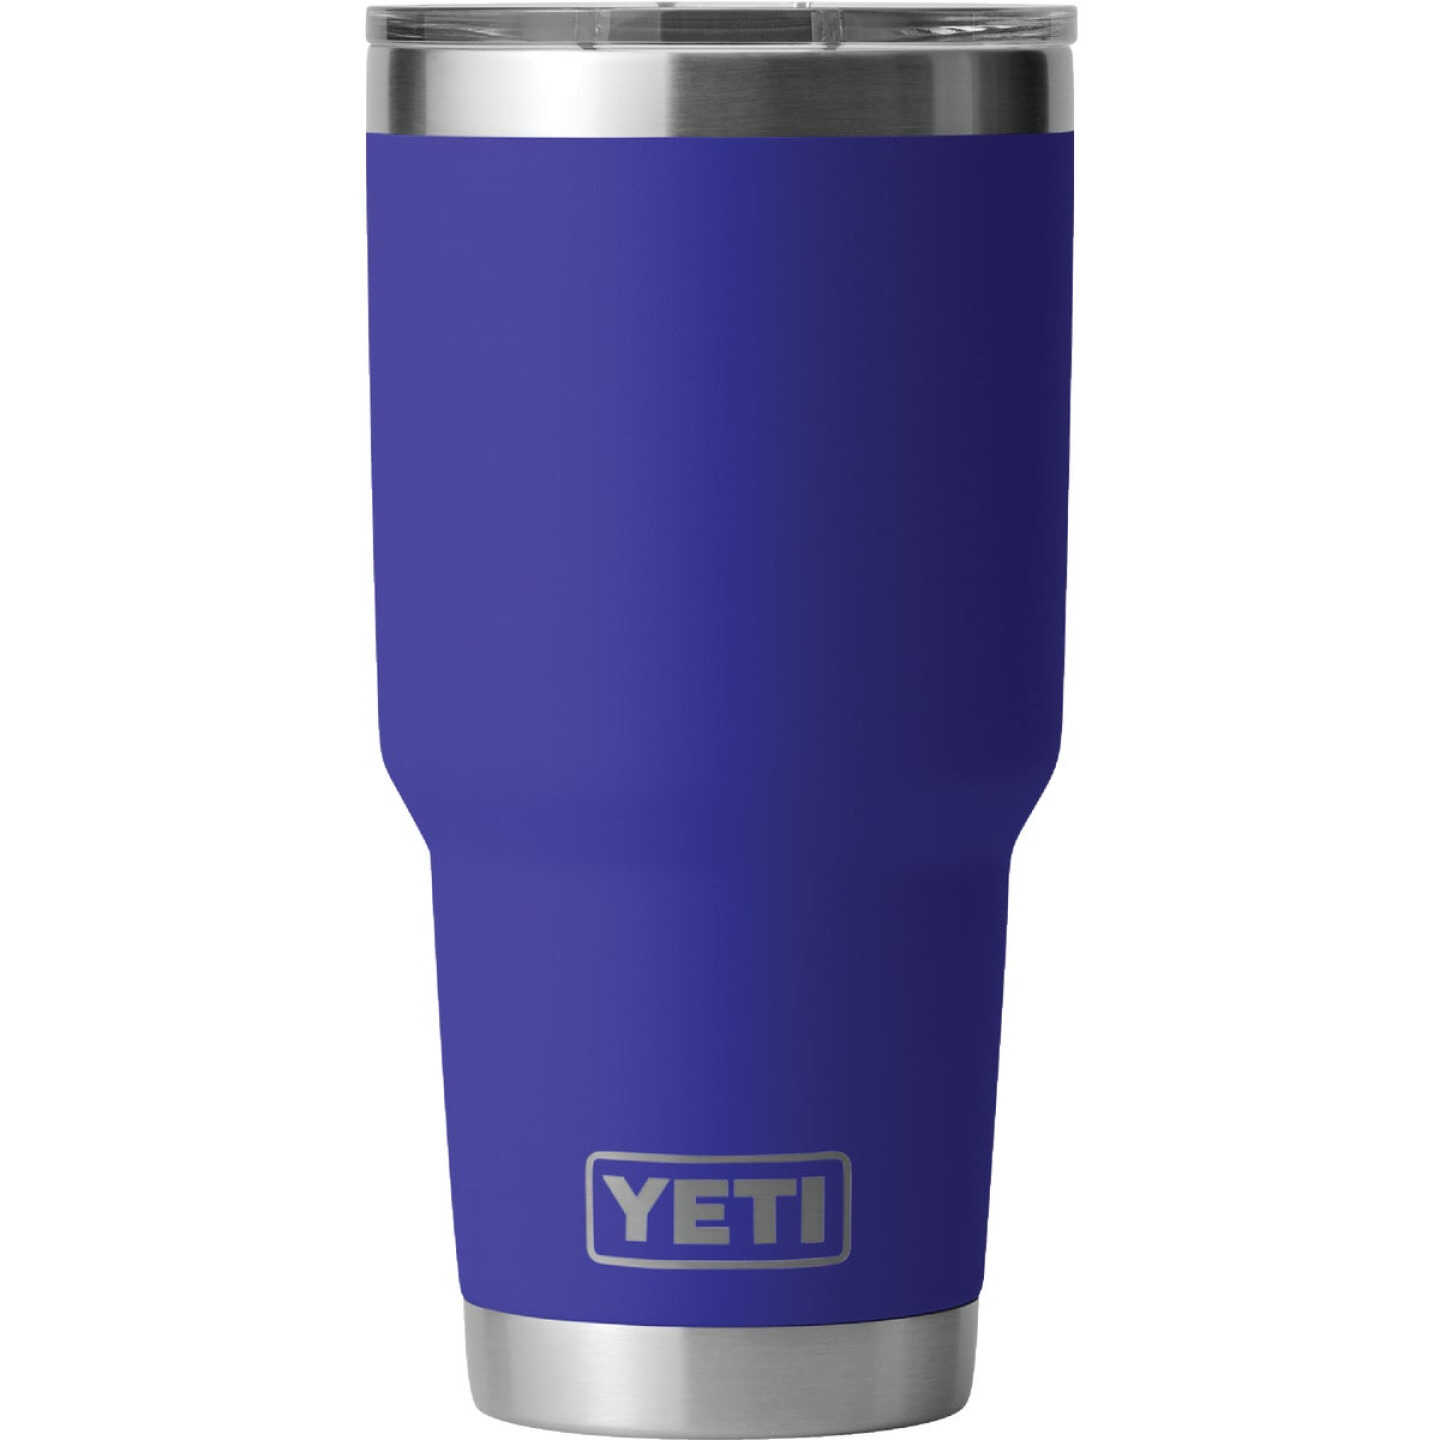 Mug Buddy Cup Holder System for Yeti Mugs 